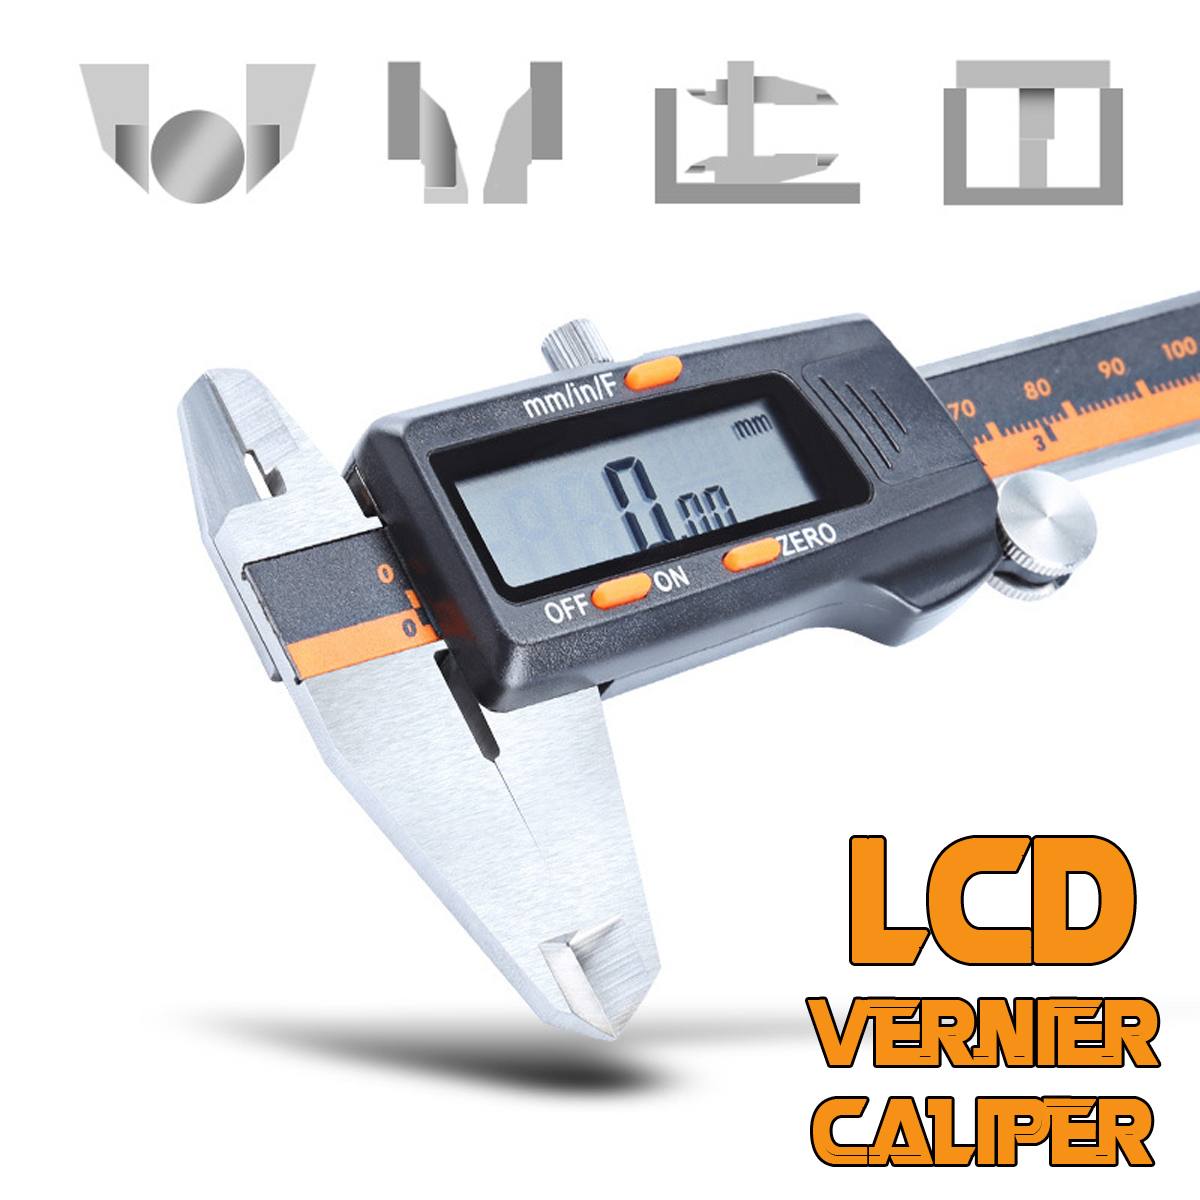 0-150mm Stainless Steel Electronic Digital Caliper LCD Vernier Caliper Gauge Micrometer Measuring Tool with Box